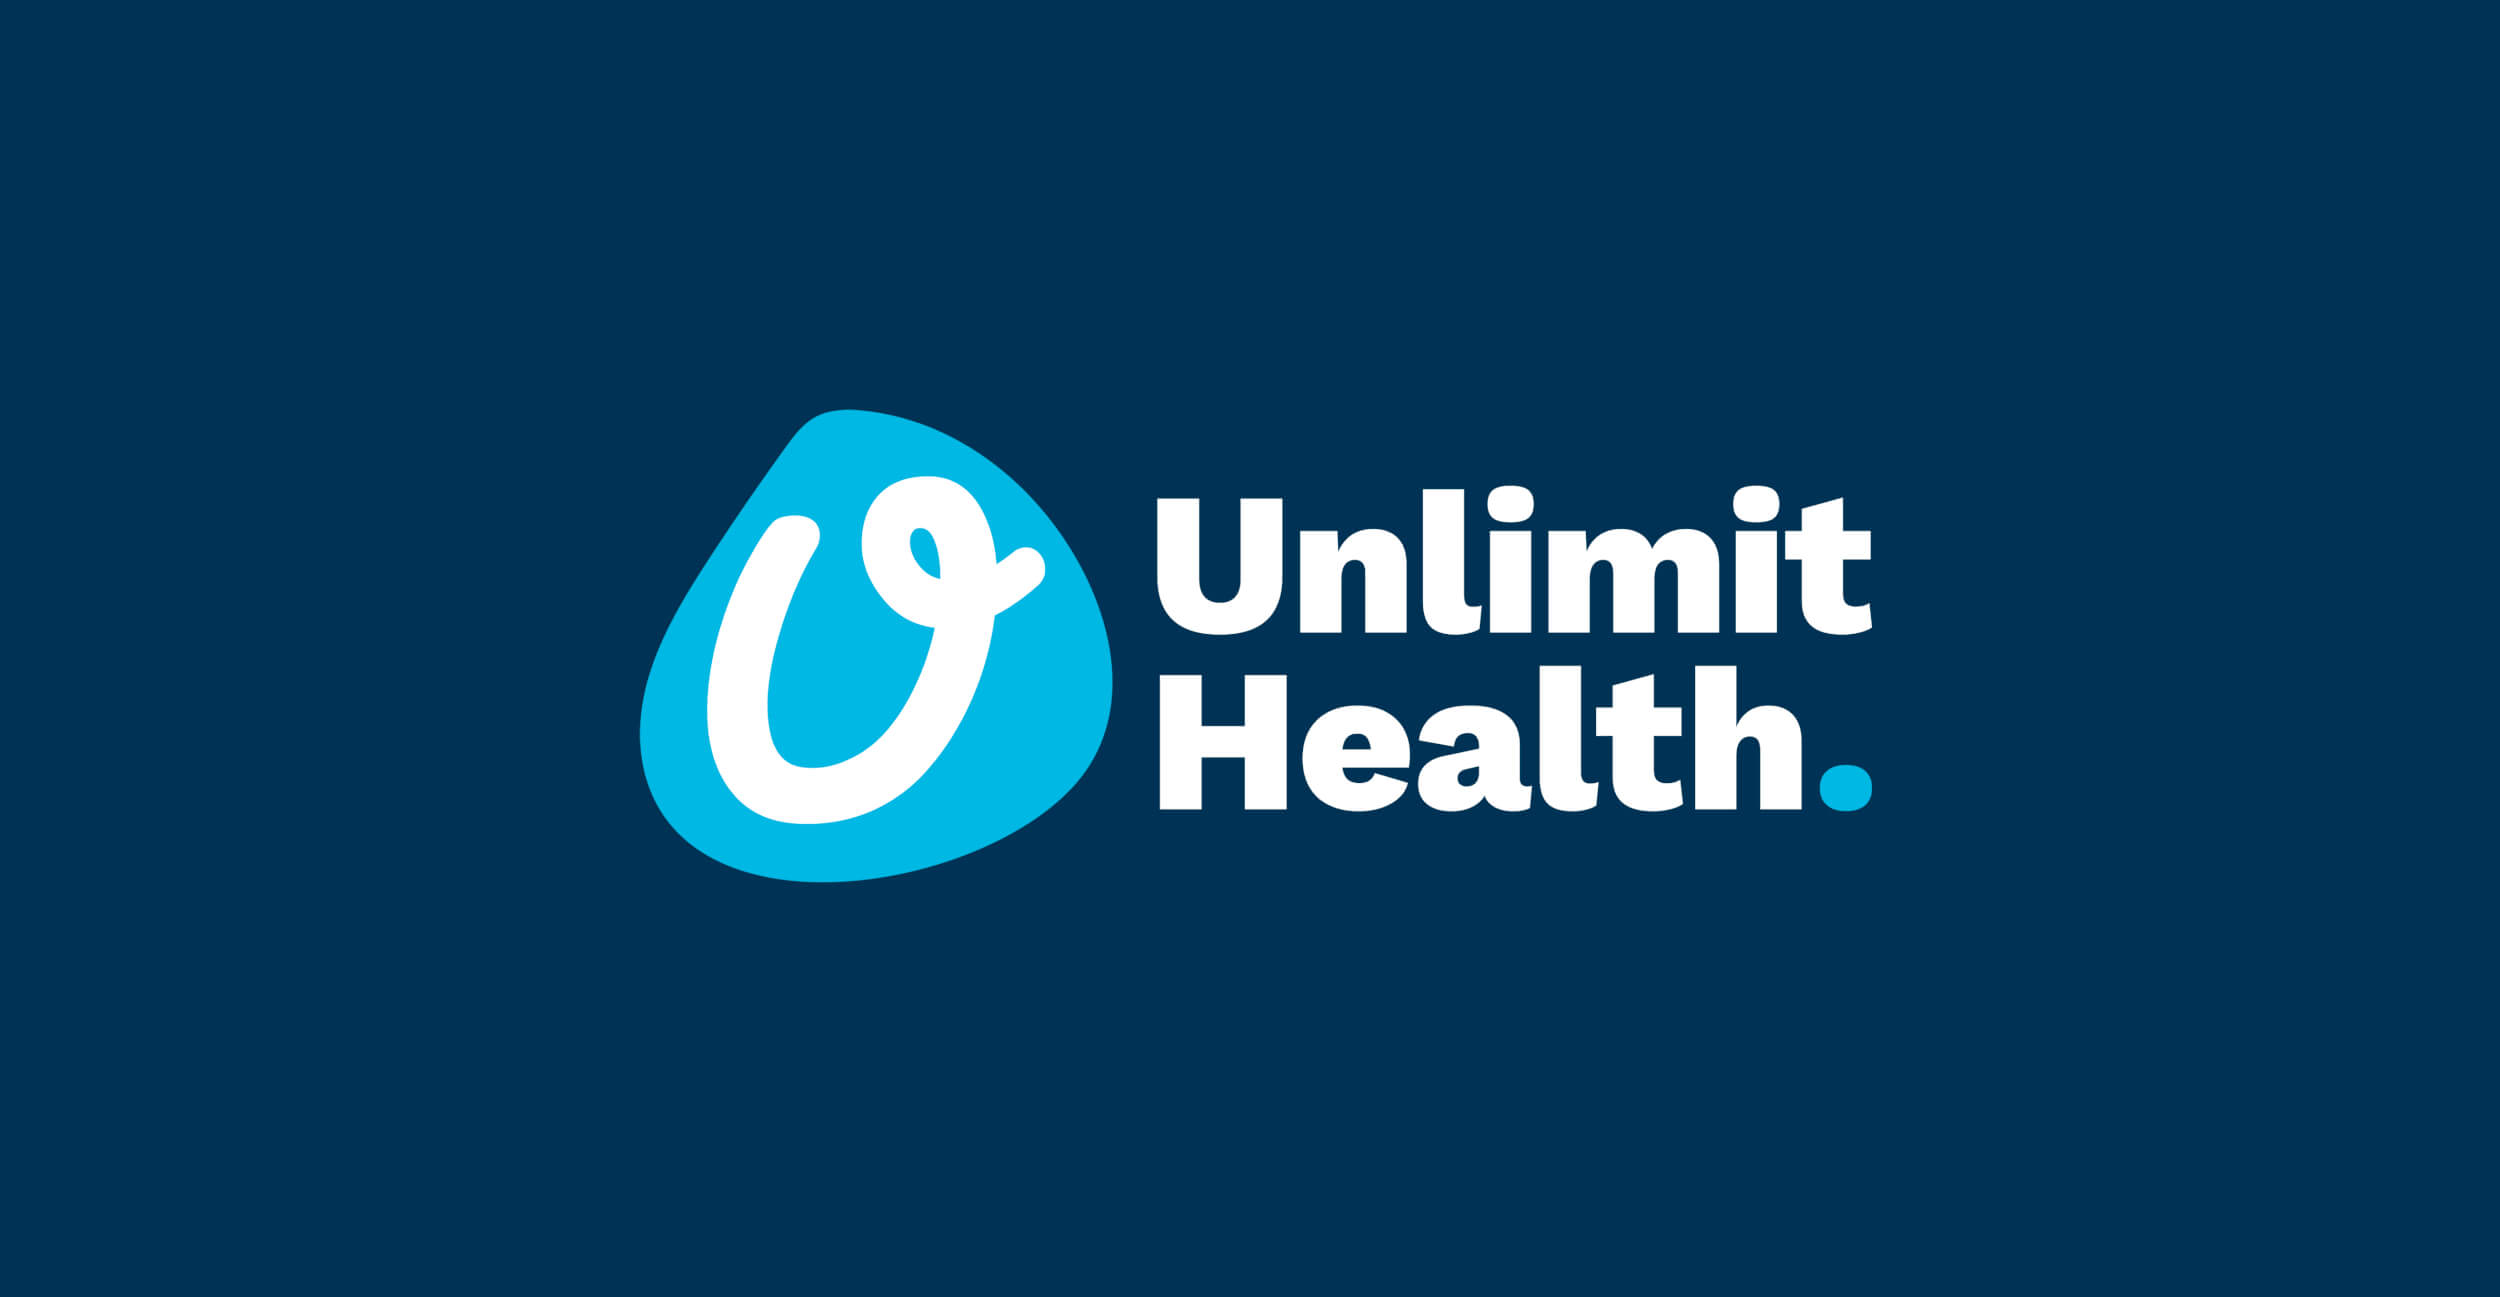 Unlimit Health identity on blue background